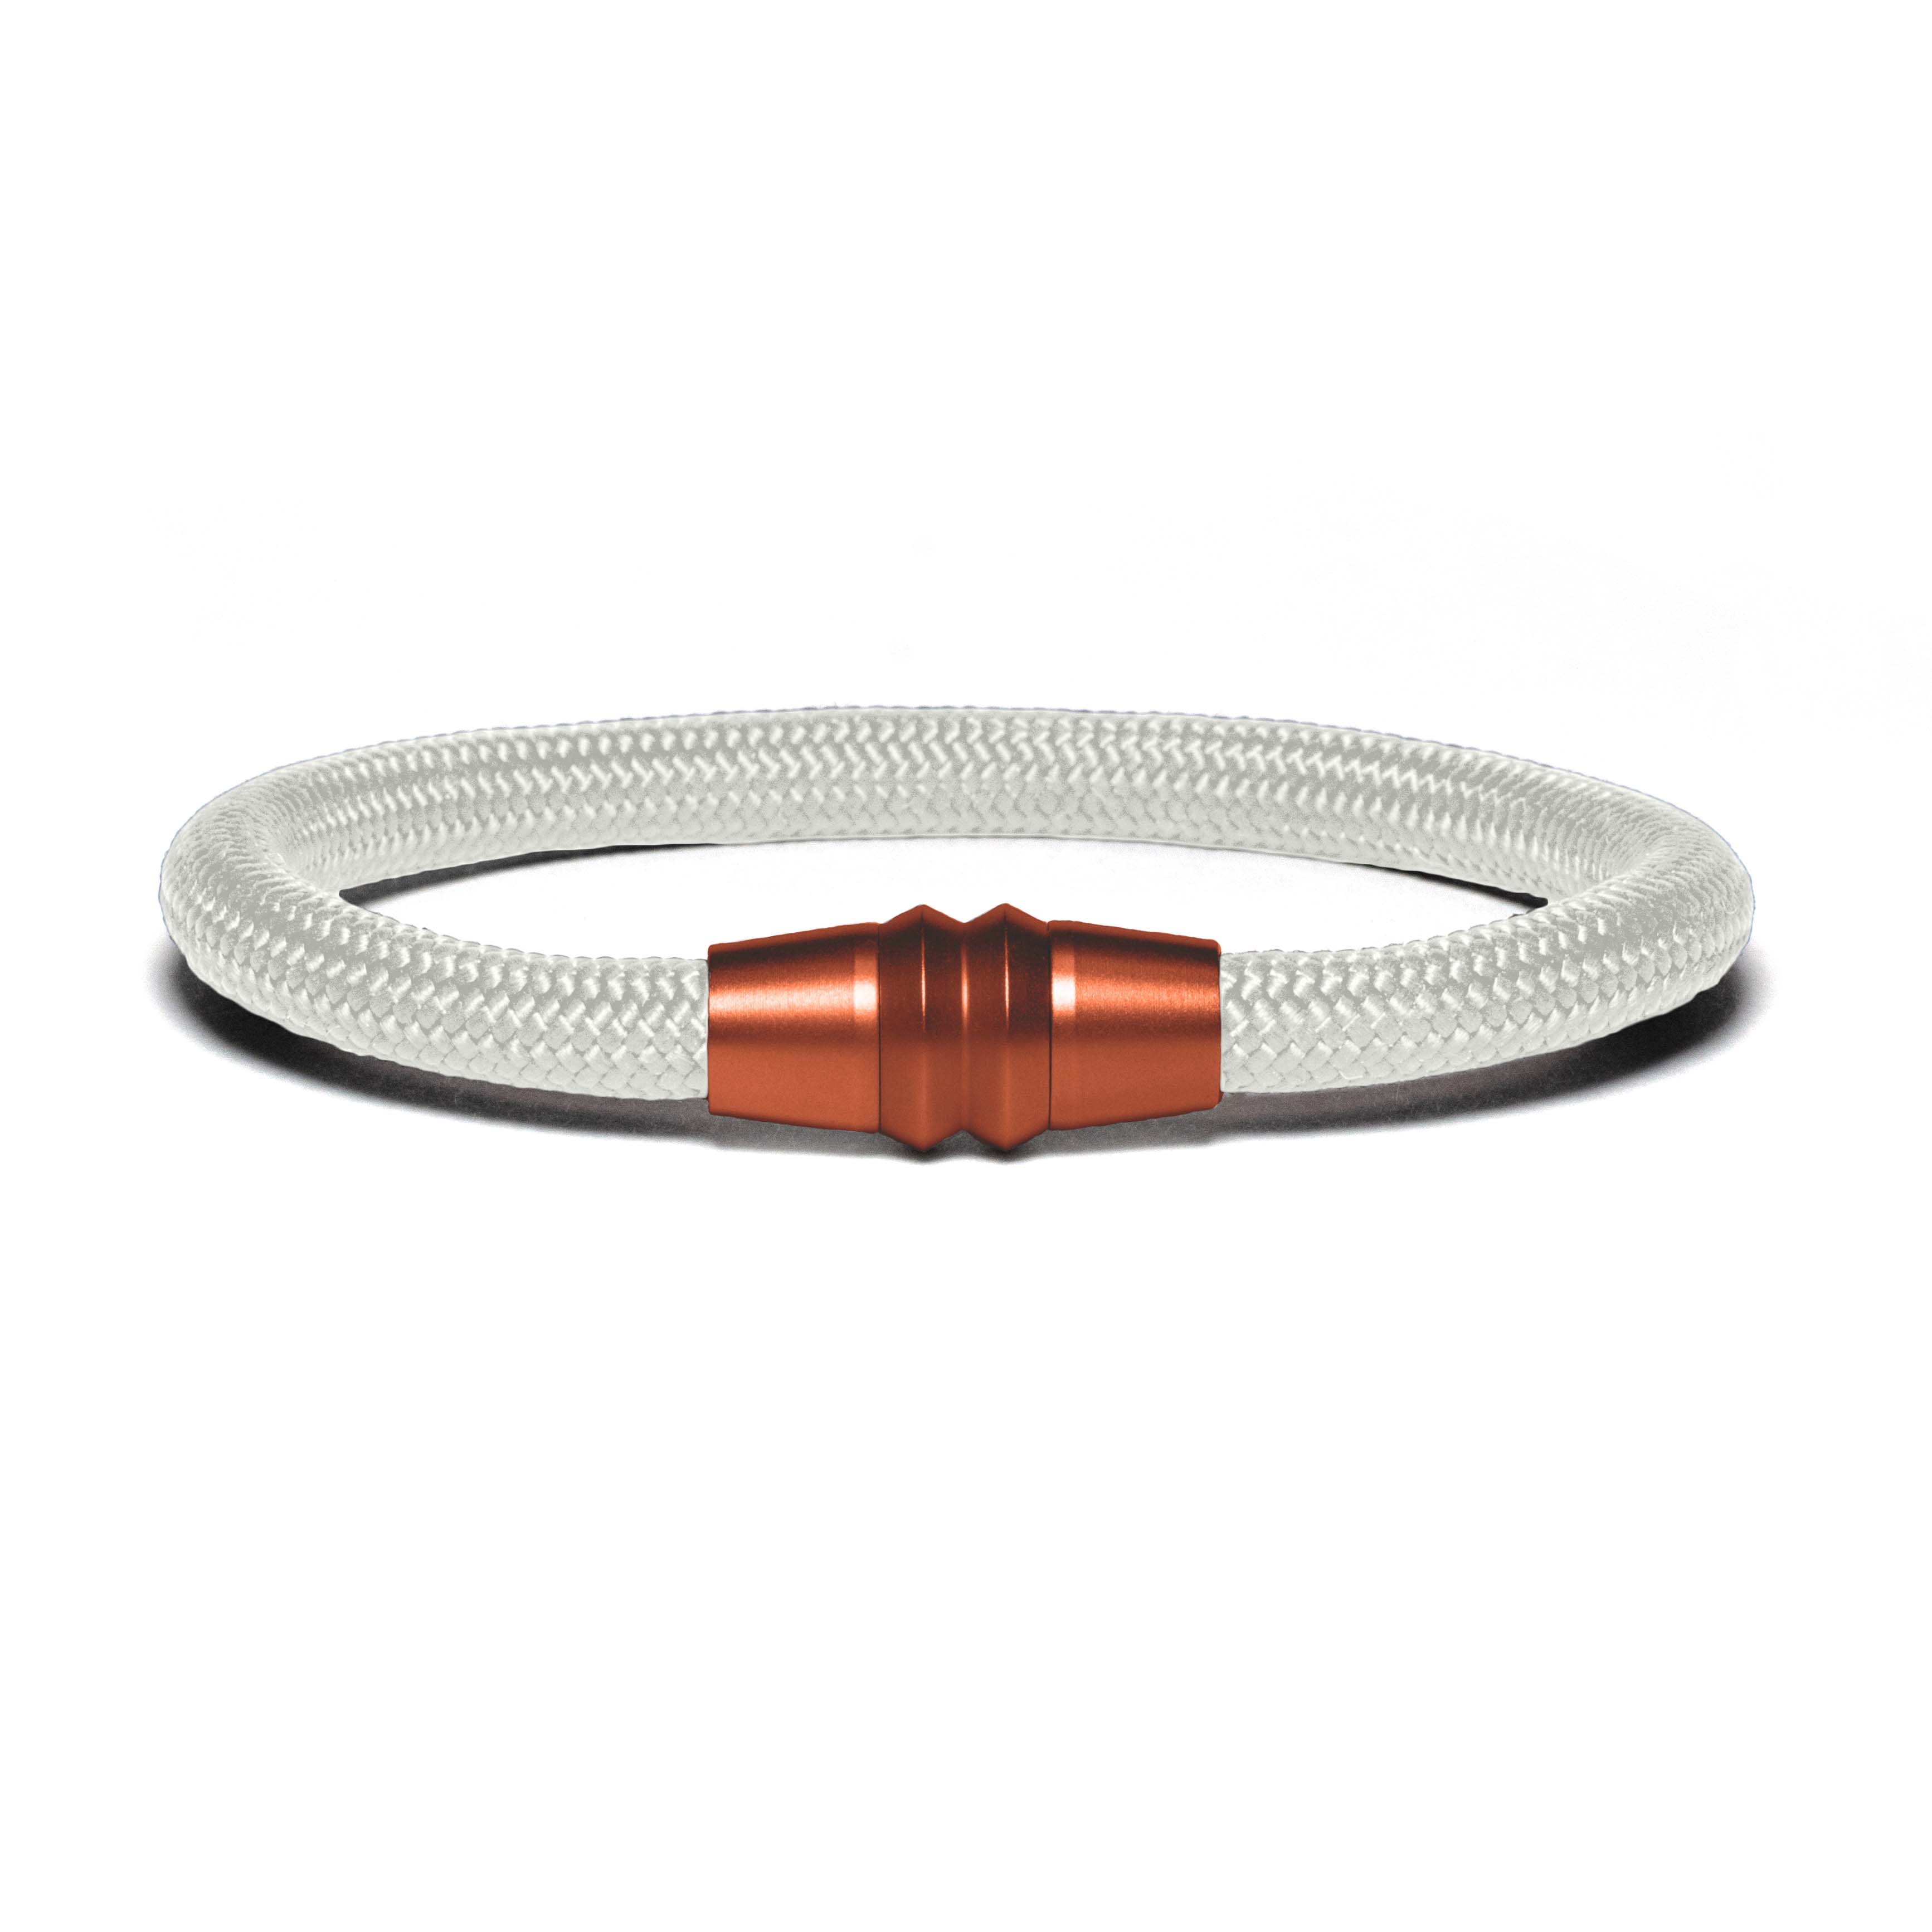 Copper PVD bracelet - white paracord